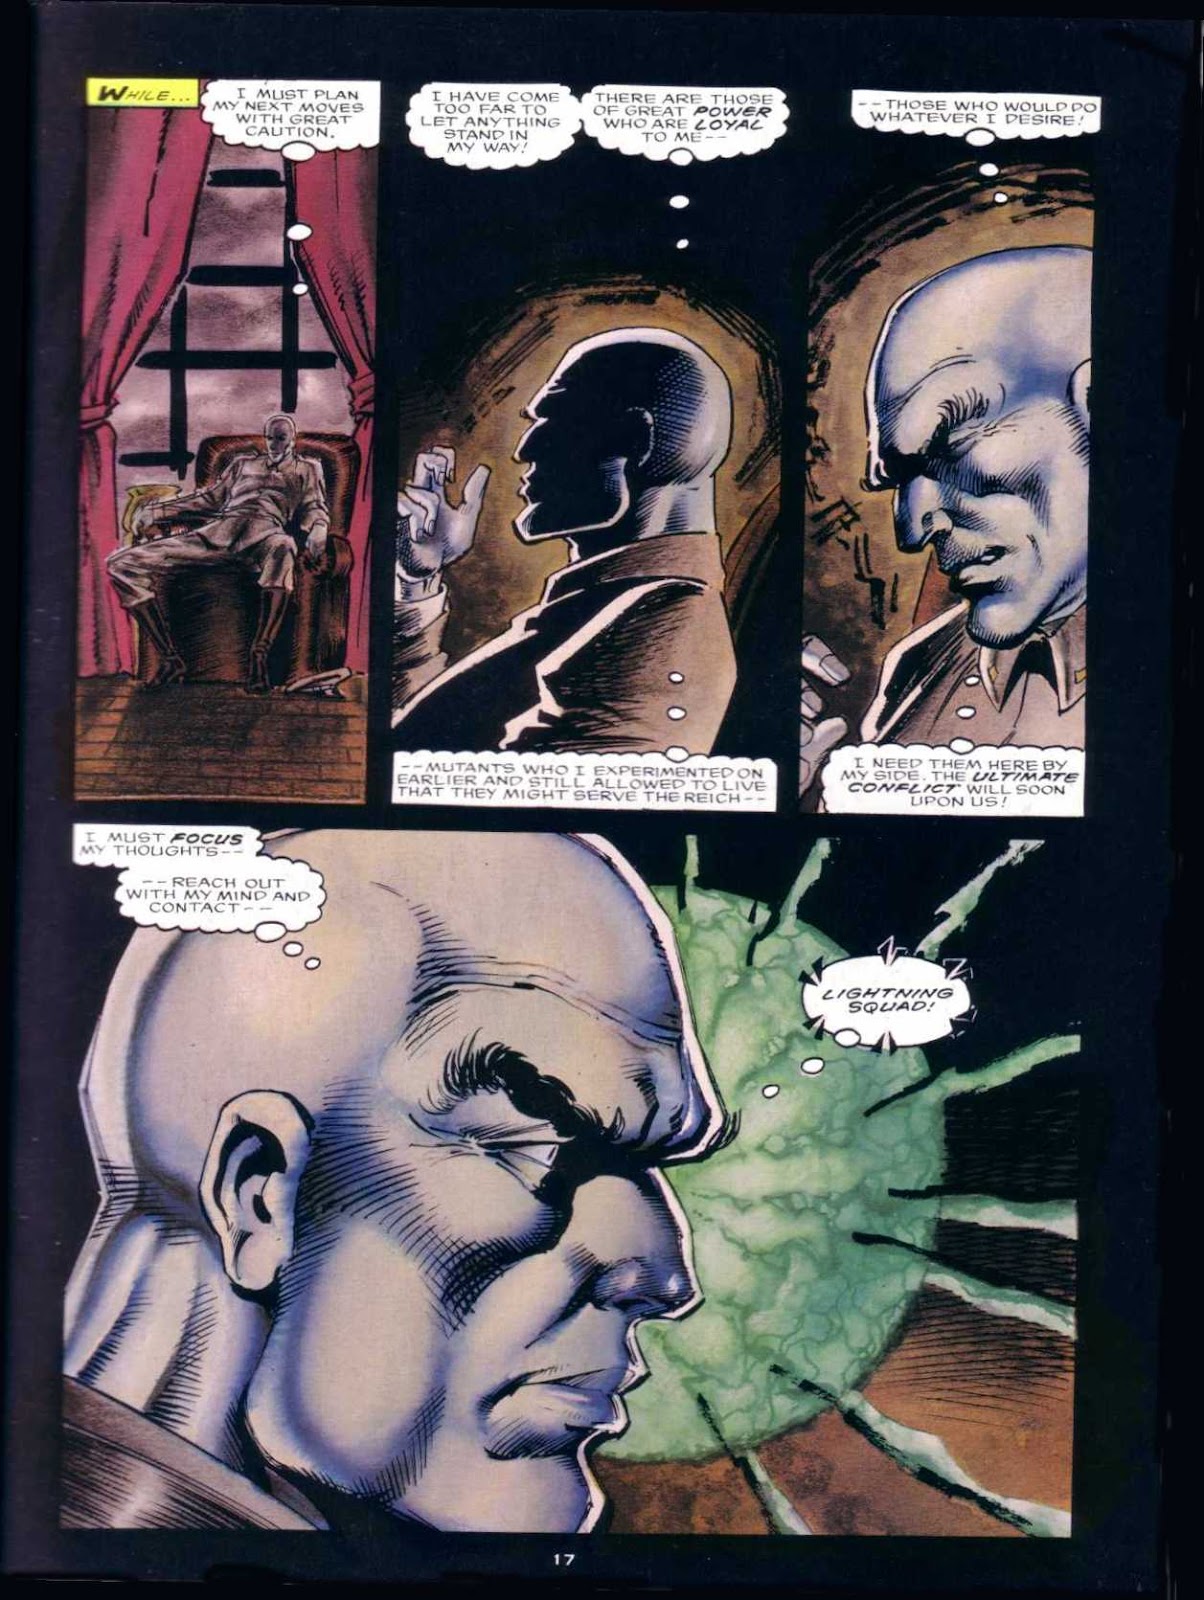 Marvel Graphic Novel issue 66 - Excalibur - Weird War III - Page 17